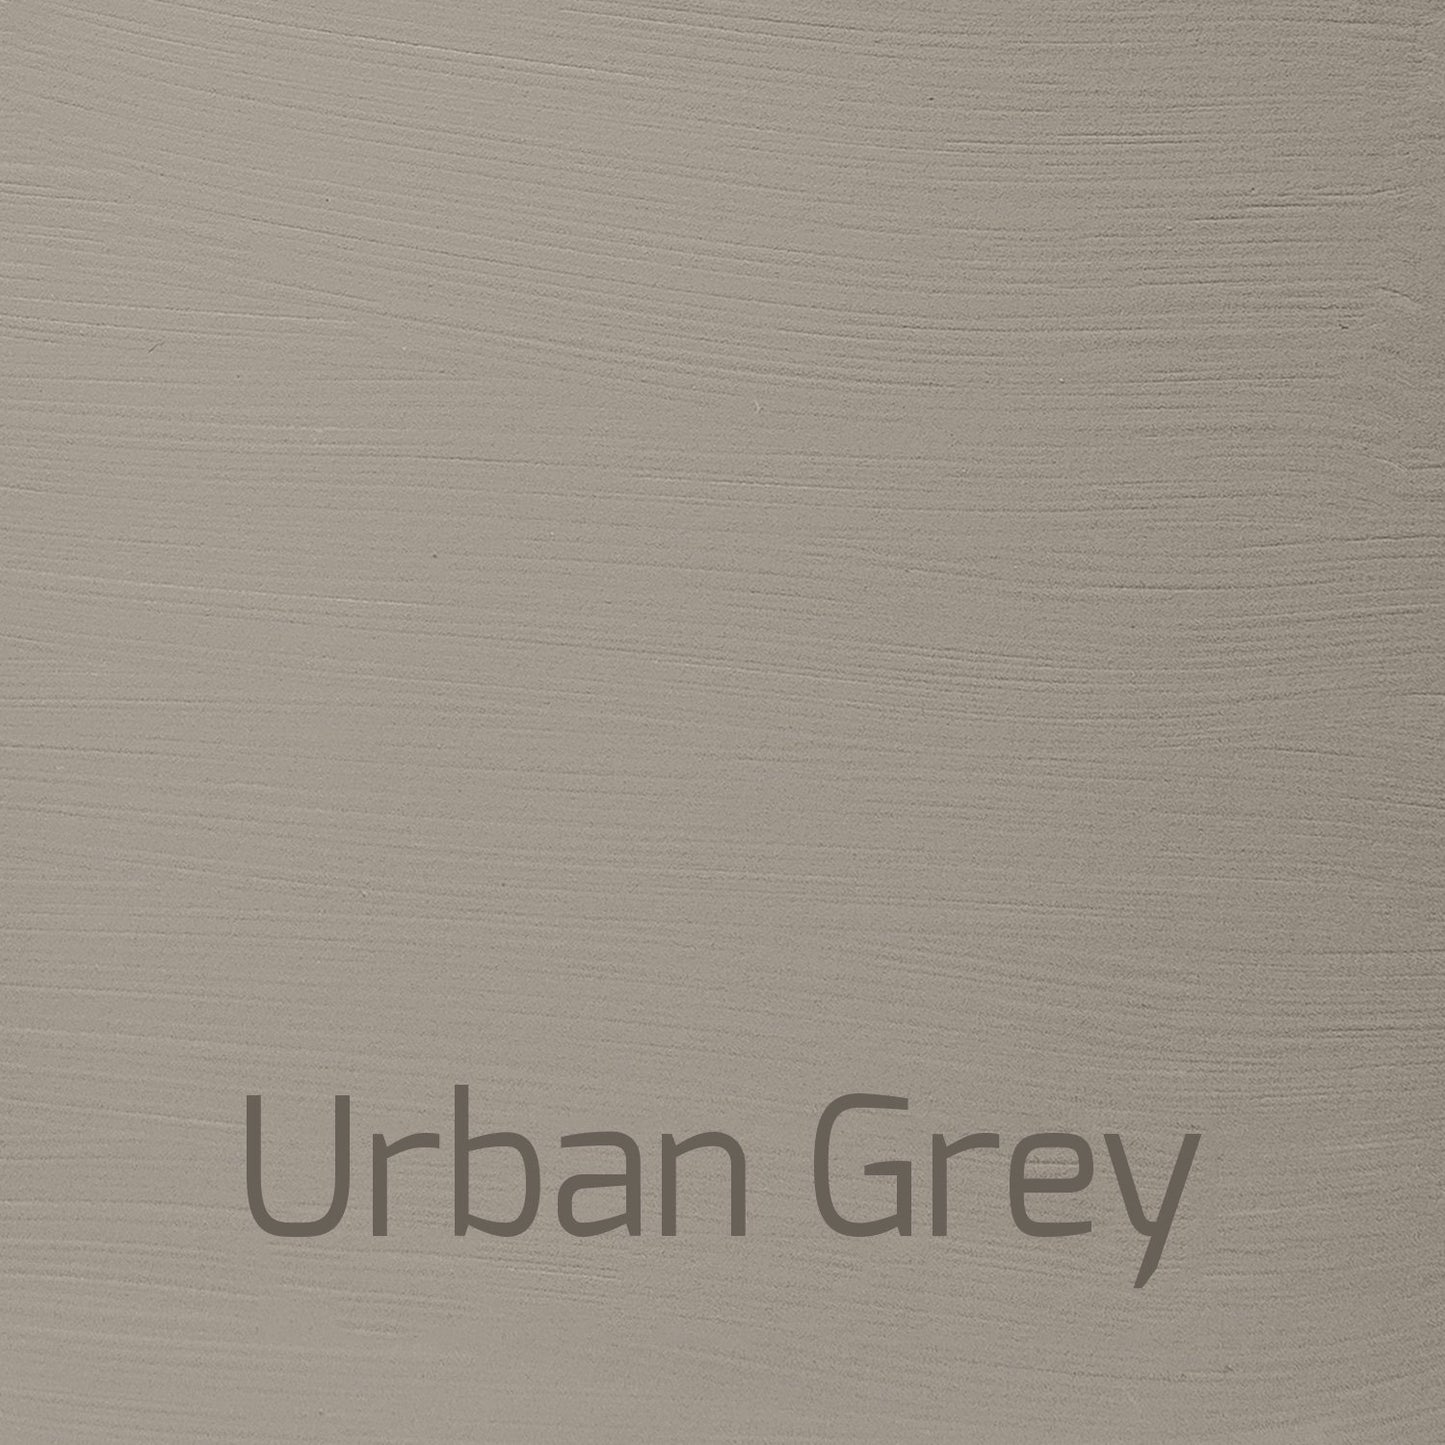 Urban Grey - Versante Matt-Versante Matt-Autentico Paint Online